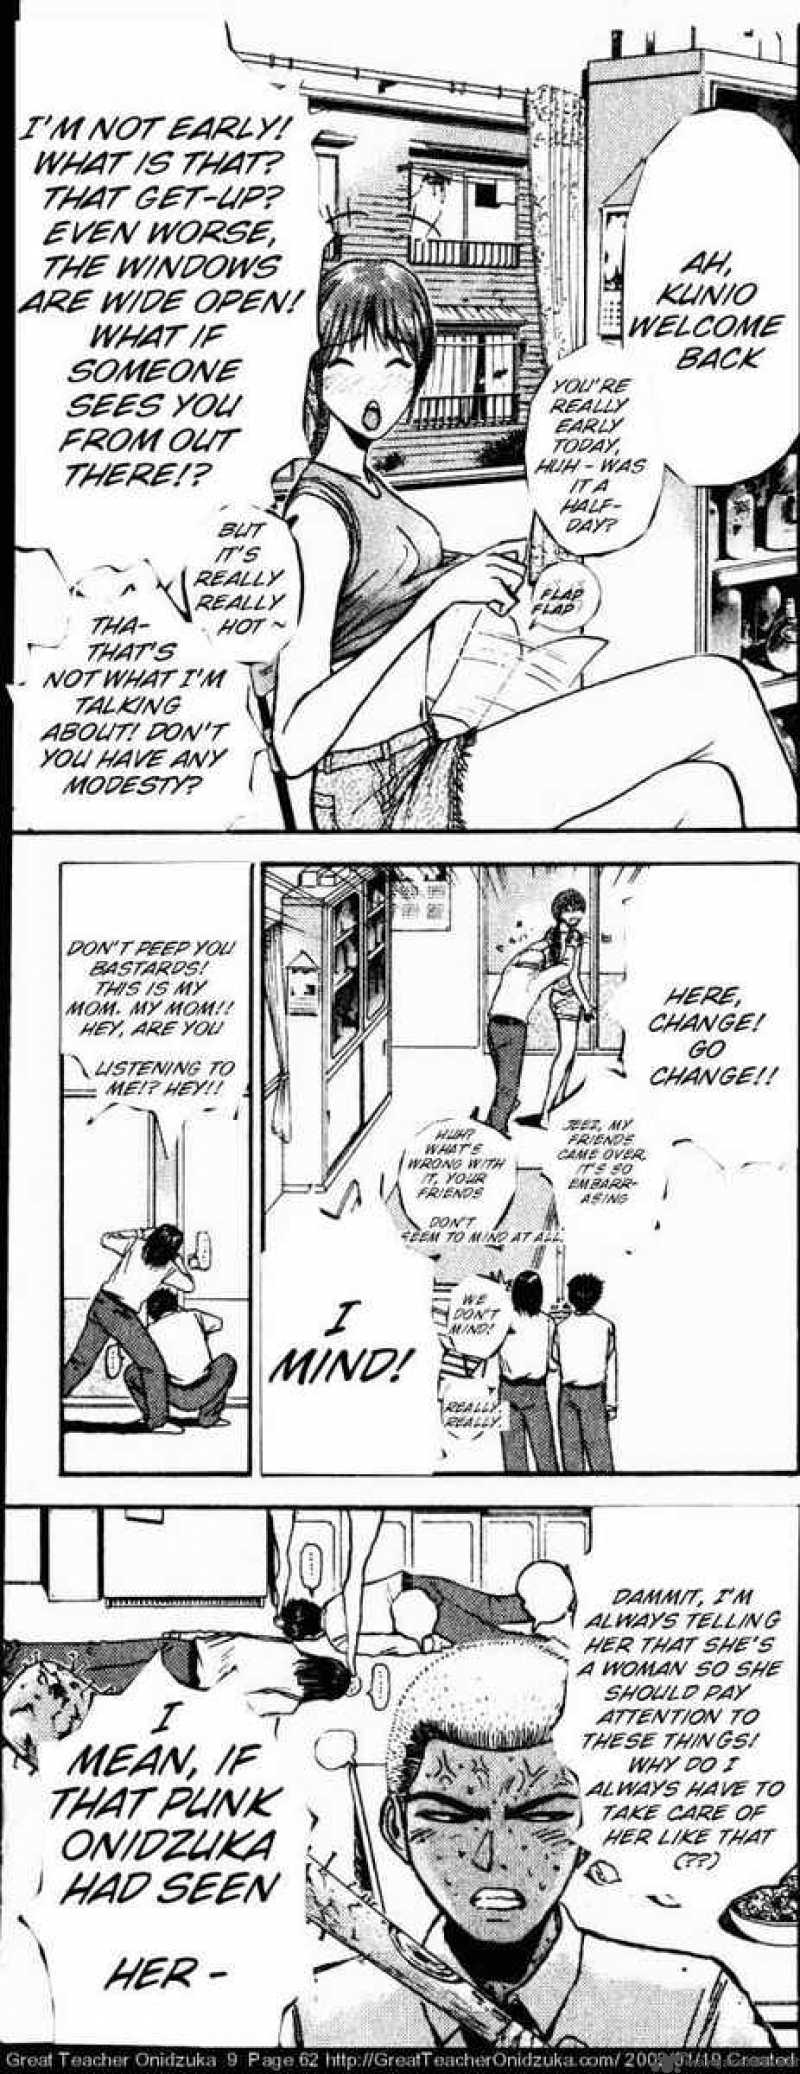 Great Teacher Onizuka 72 2